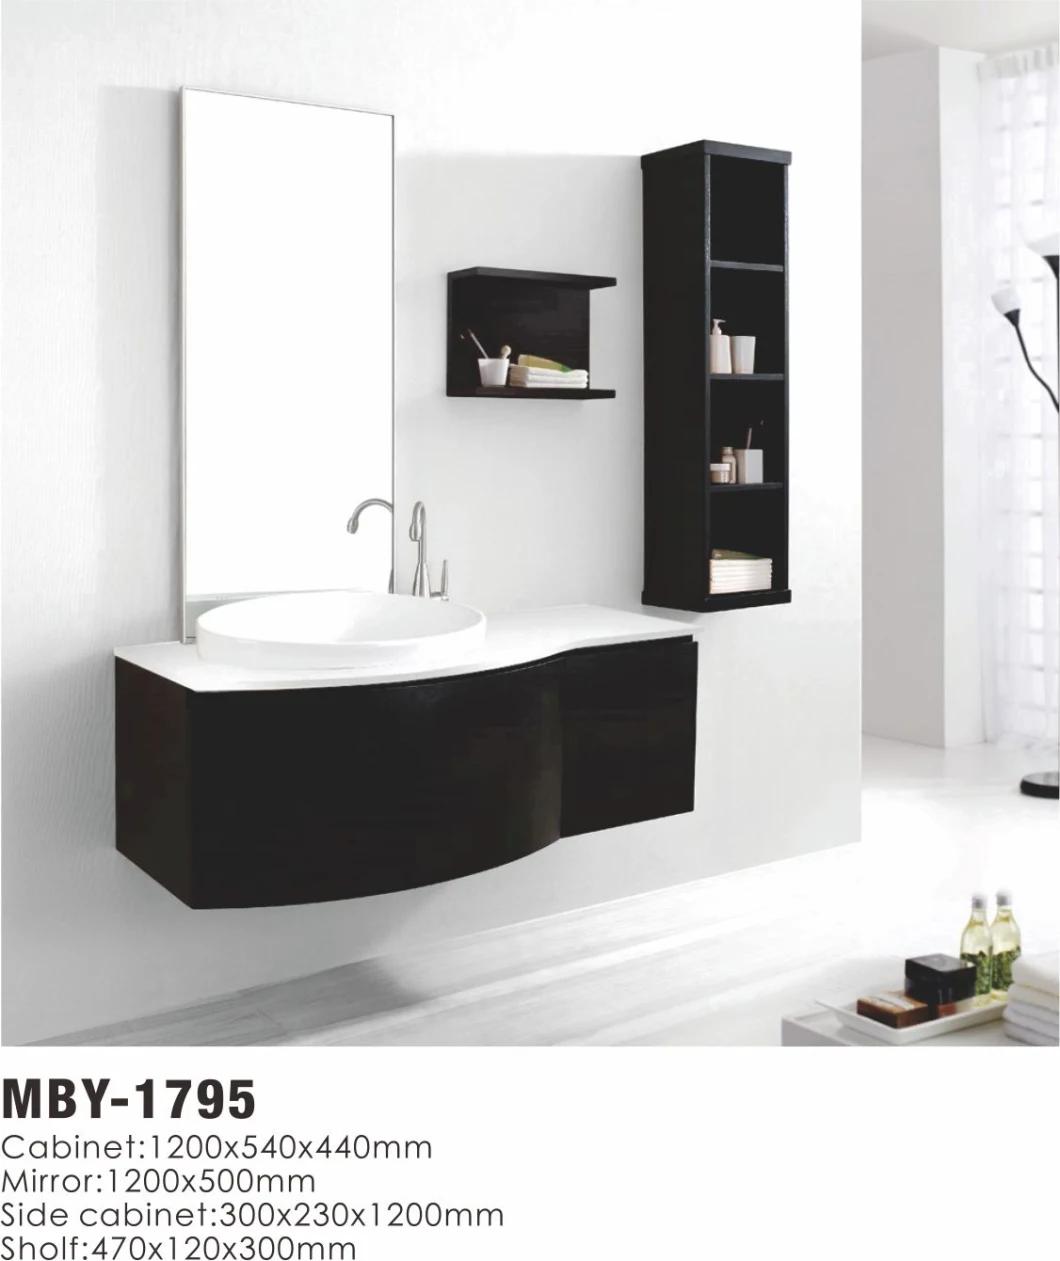 Marketing Champion Melamine Bathroom Cabinet with Double Basin